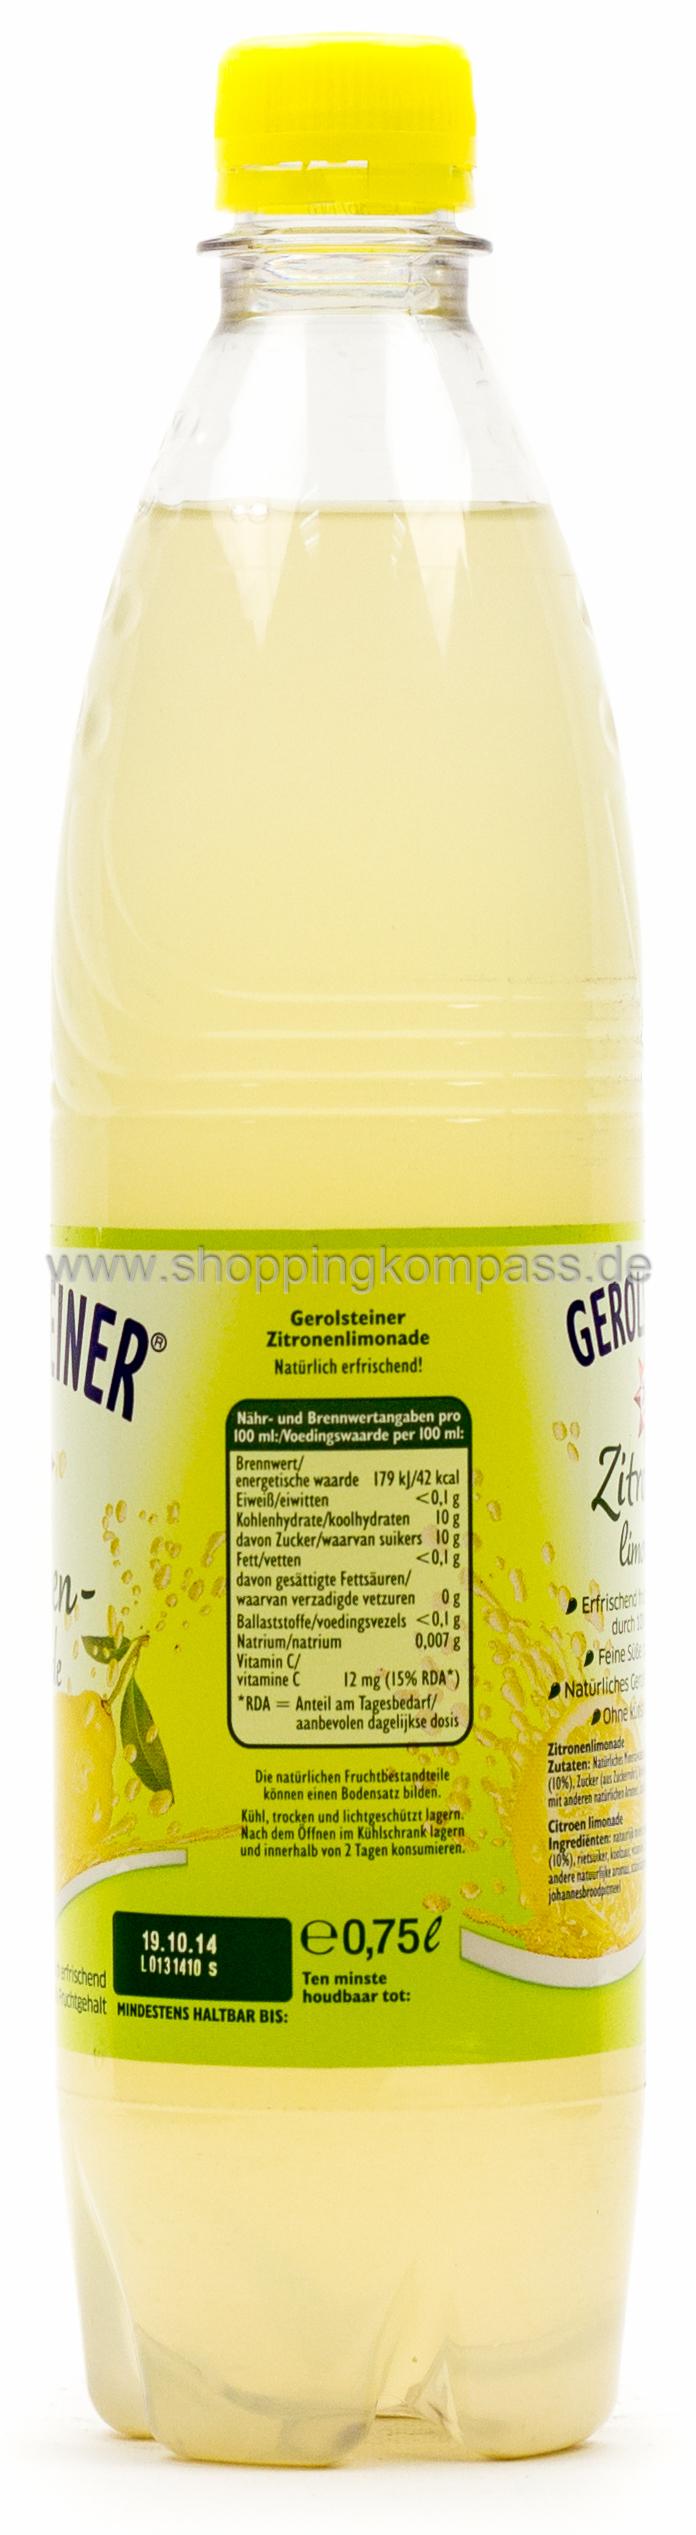 Gerolsteiner Limonade Zitrone trüb Kasten 12 x 0,75 l PET Mehrweg